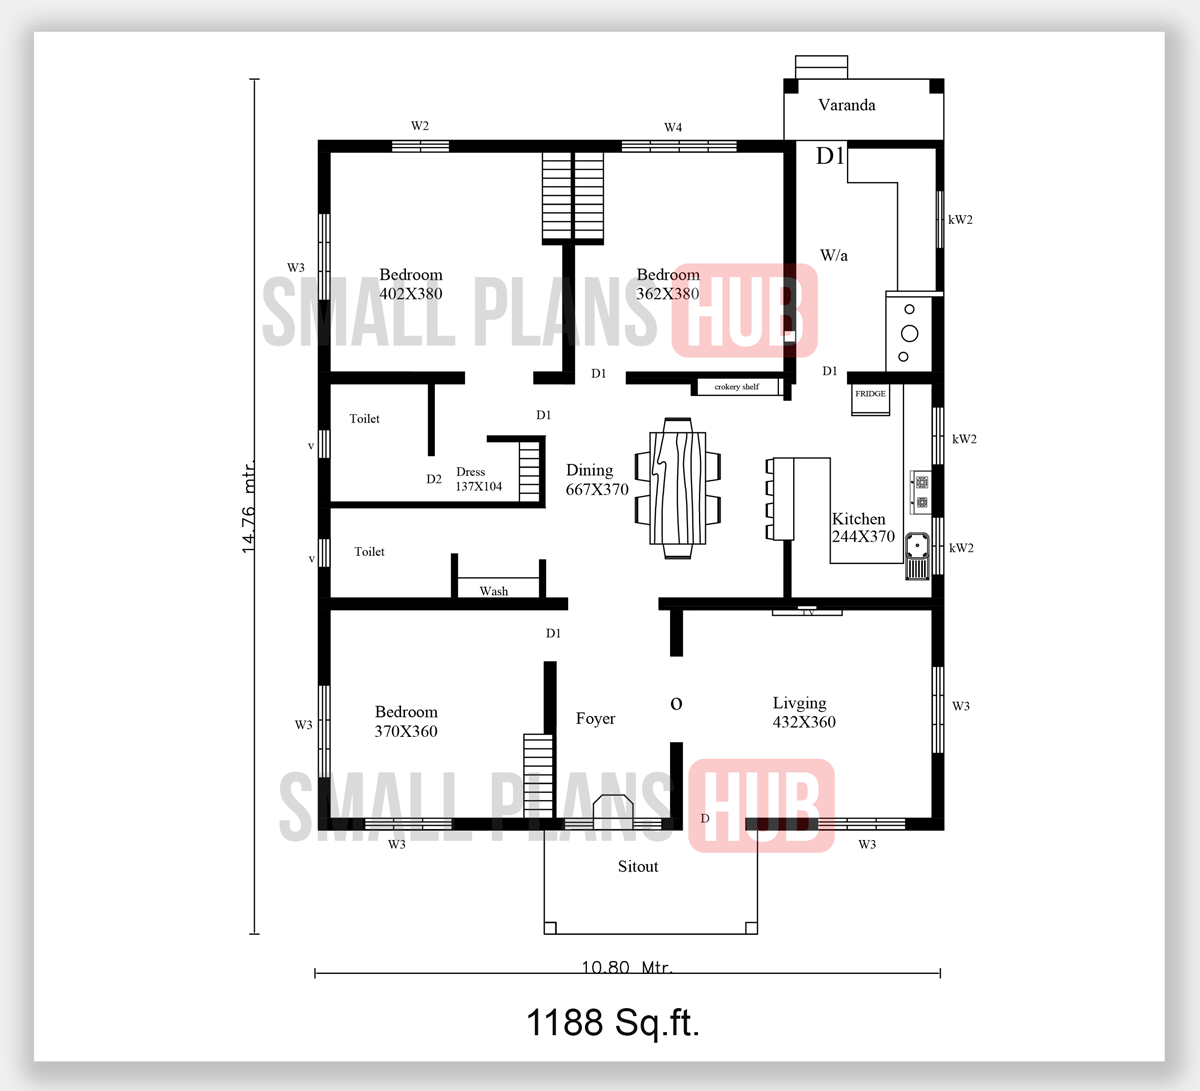 Kerala Model 3 Bedroom House Plans. Total 3 House Plans Under 1250 